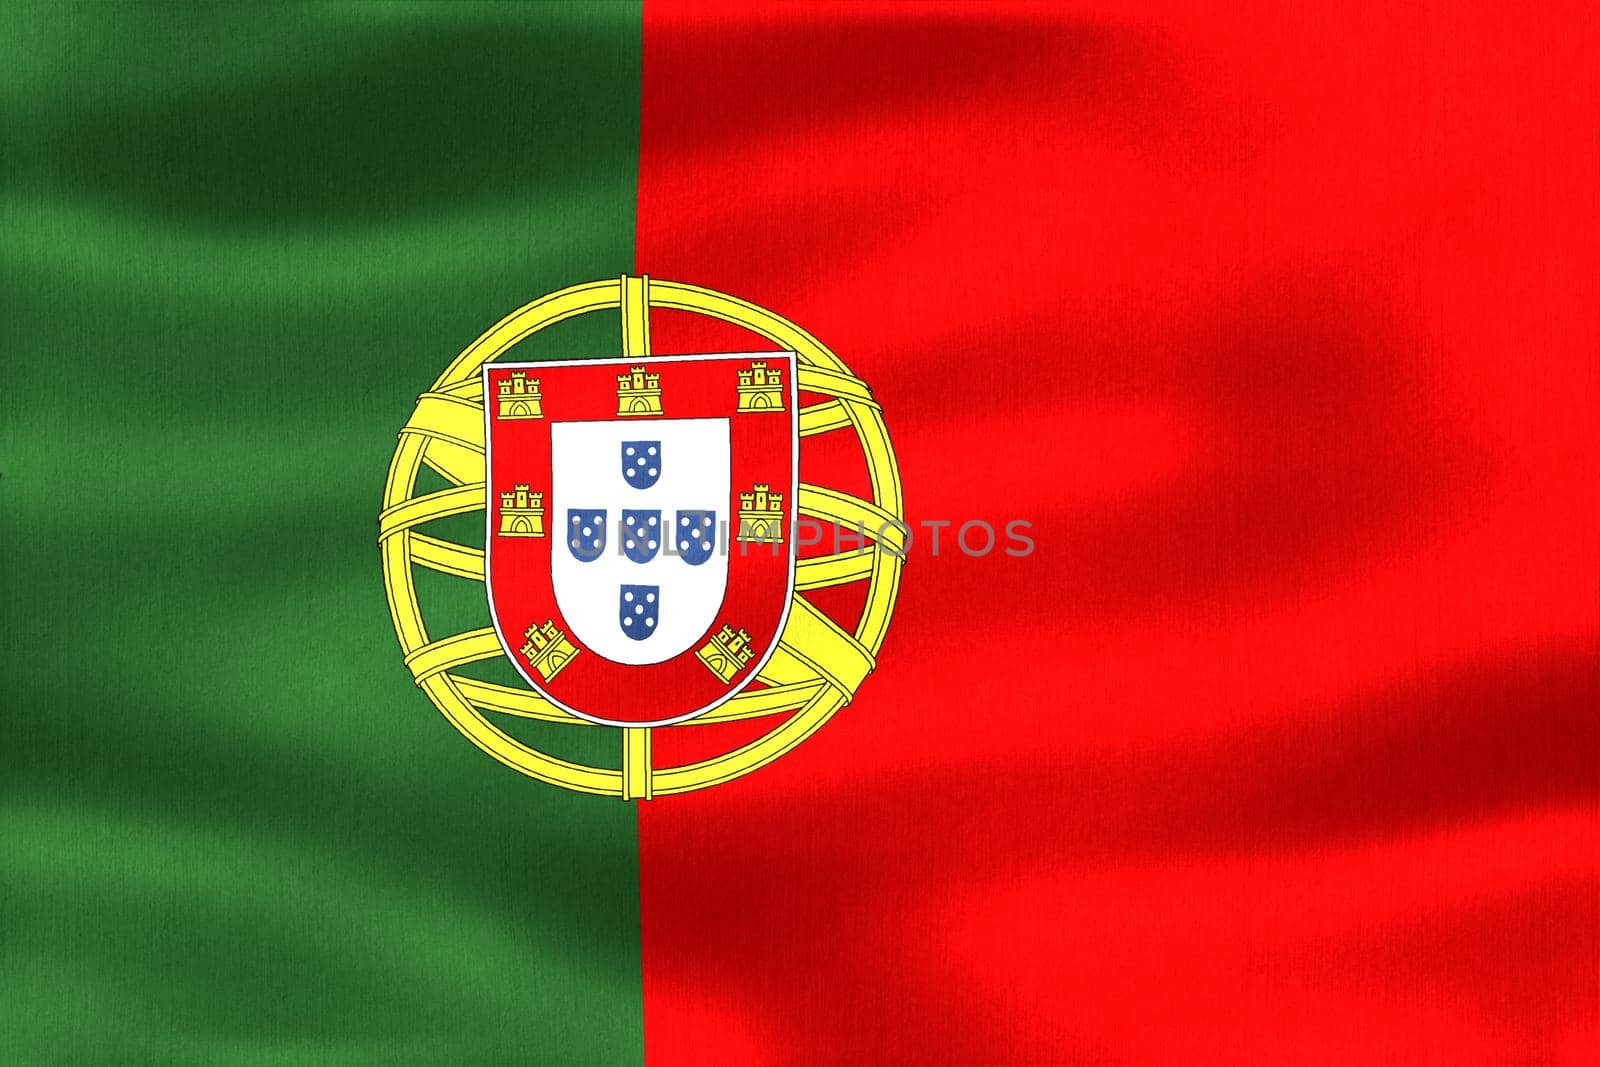 Portugal flag - realistic waving fabric flag